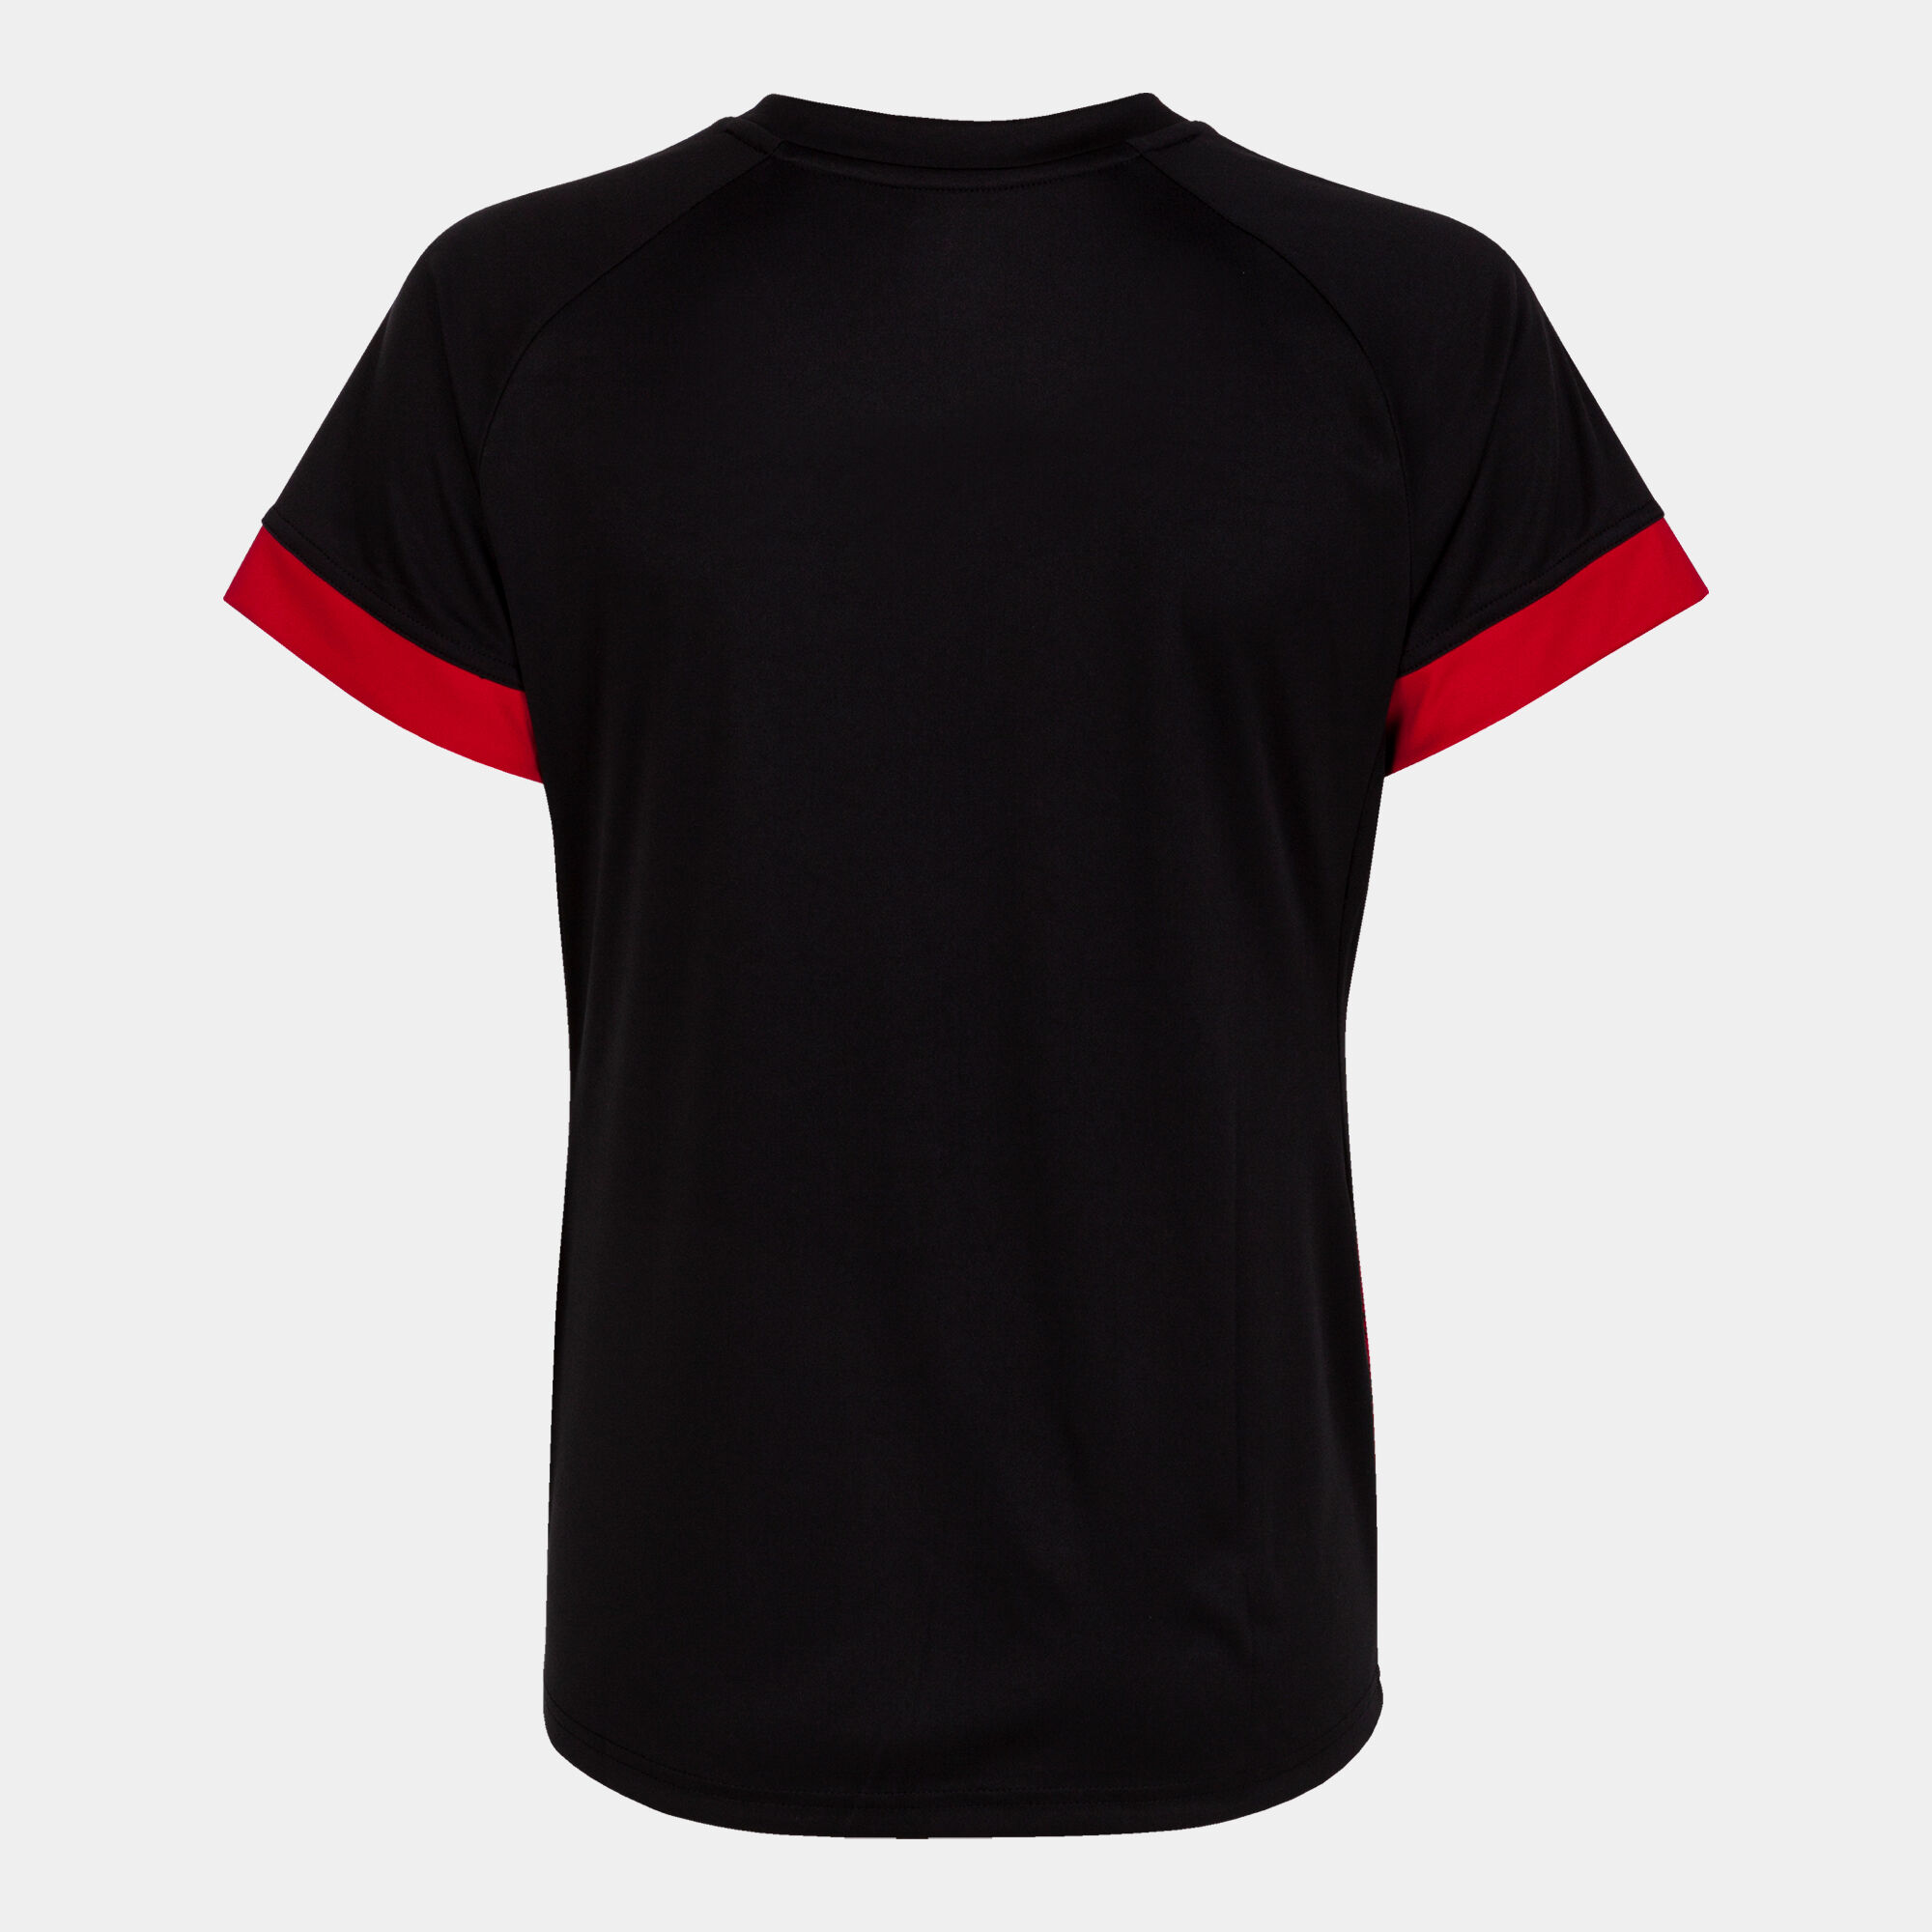 Camiseta manga corta mujer Supernova III negro rojo